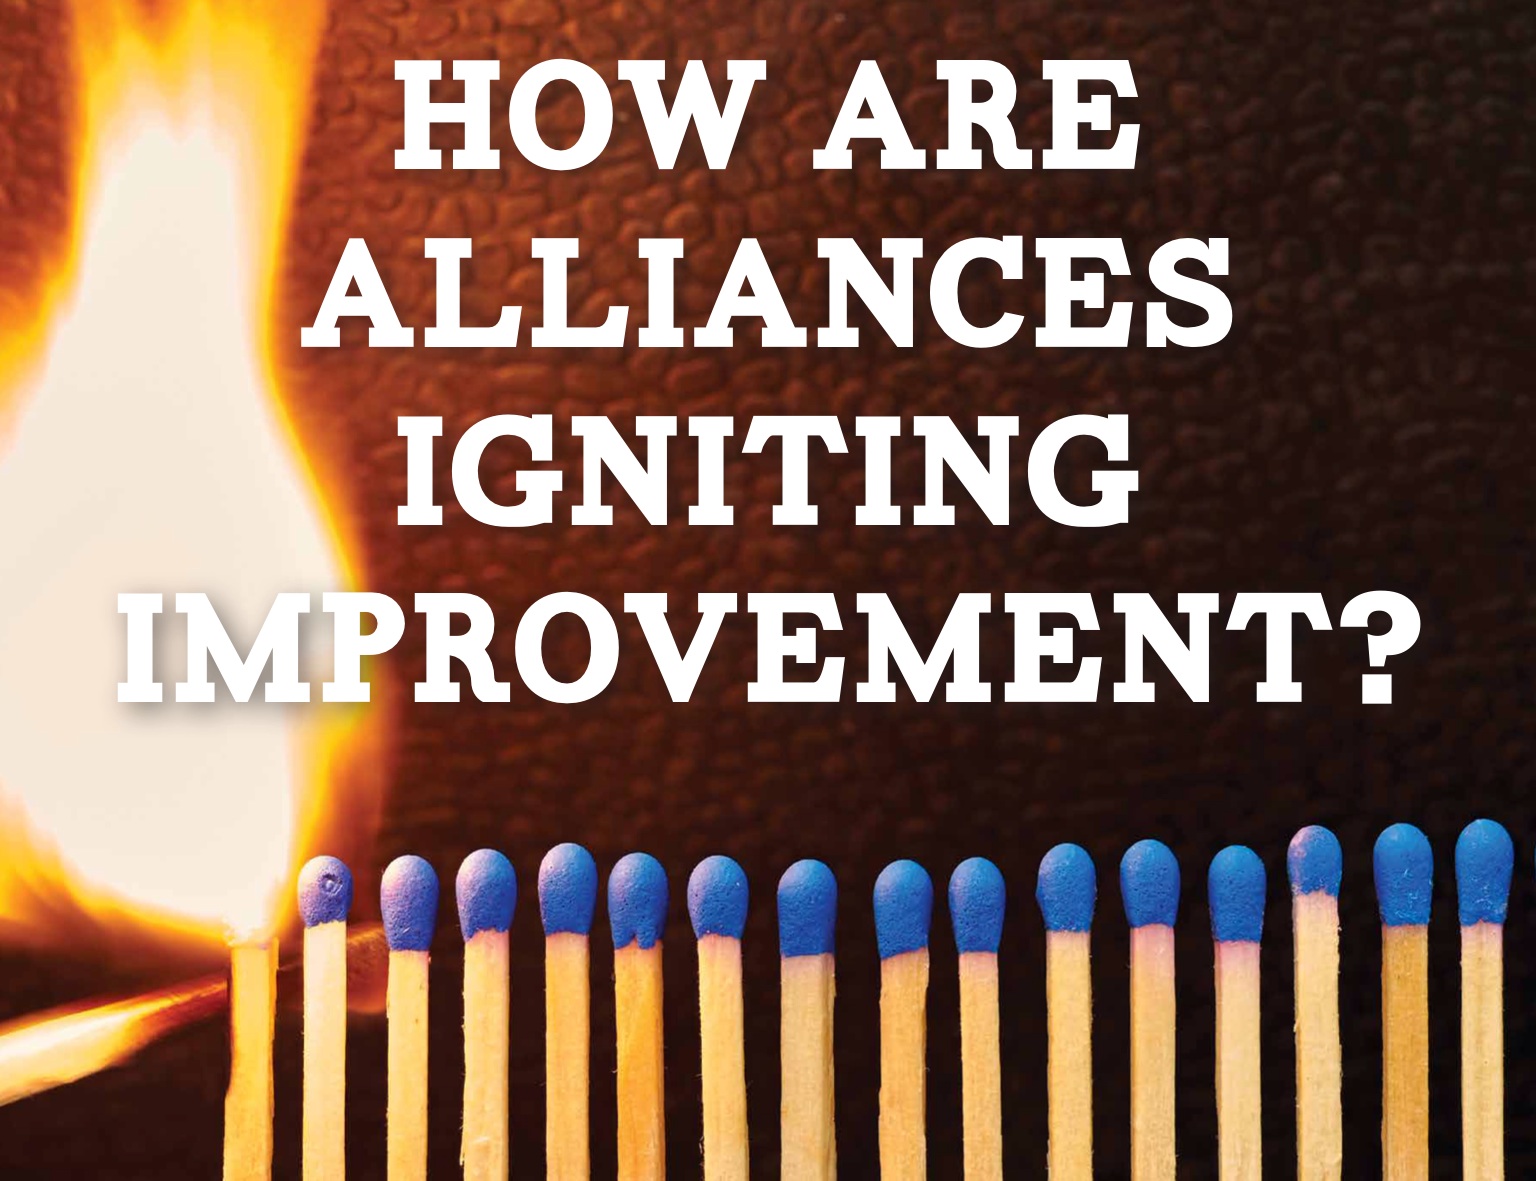 How are alliances igniting improvement?